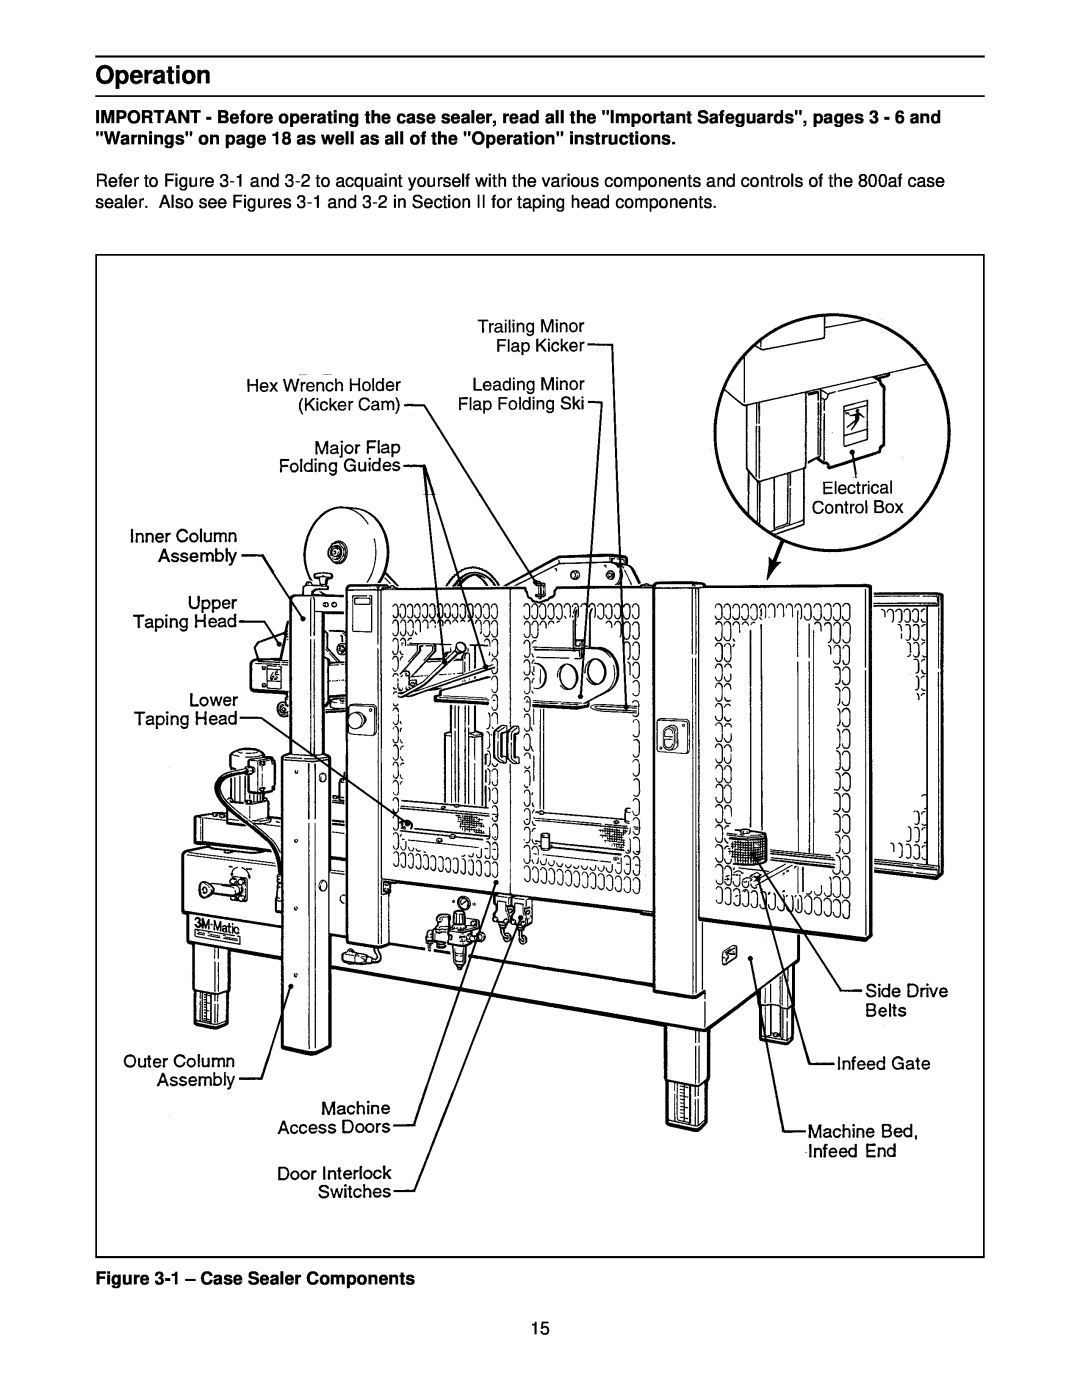 3M 39600 manual Operation, 1 - Case Sealer Components 